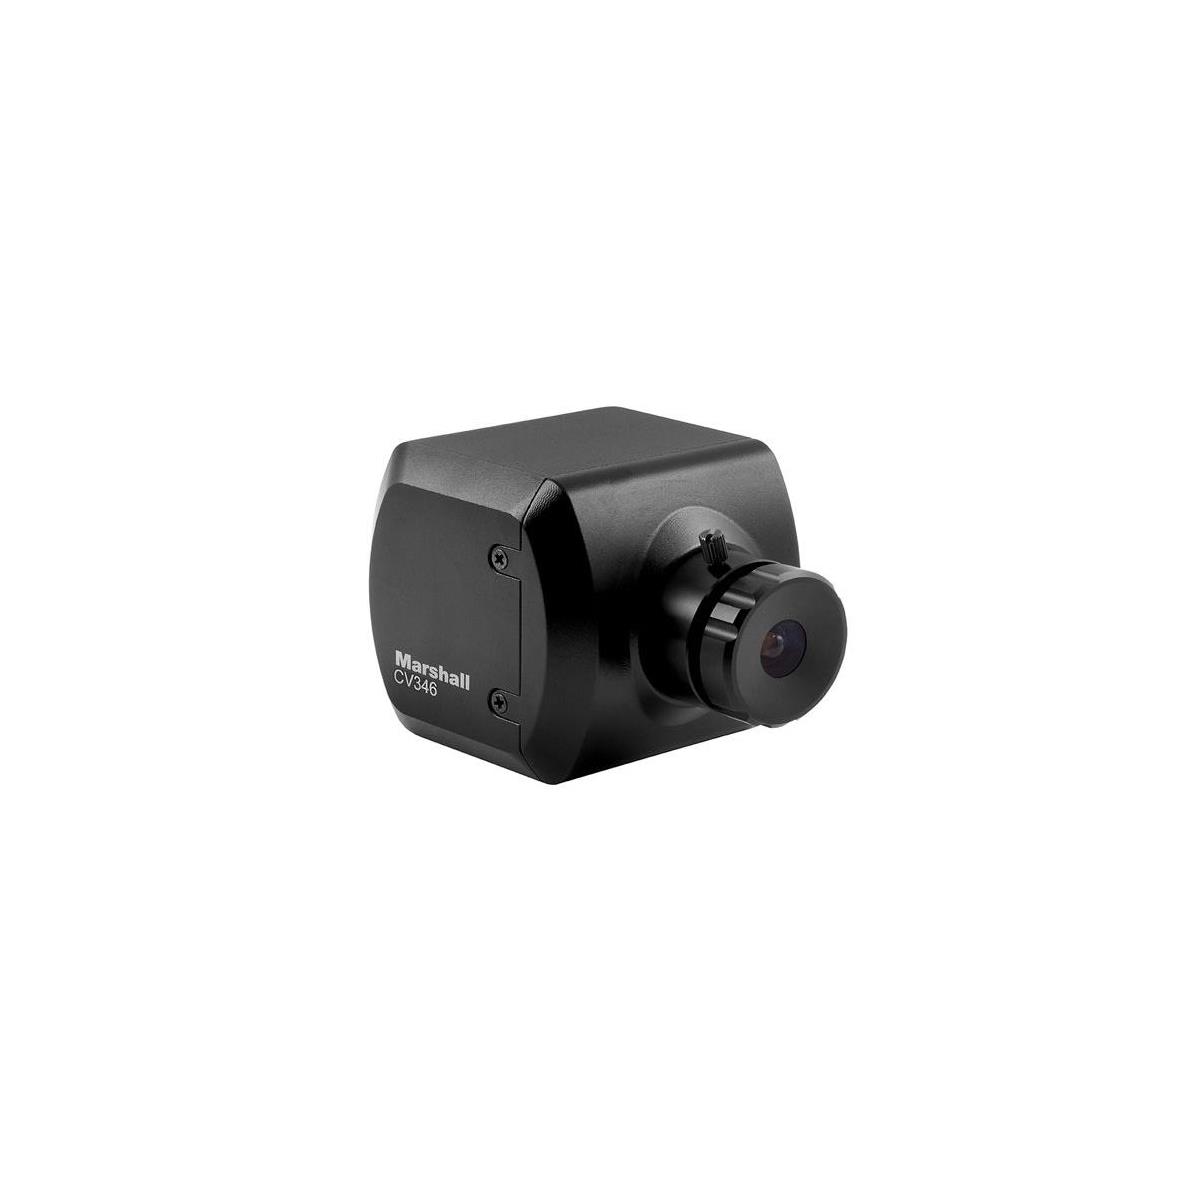 Image of Marshall Electronics CV346 FHD Camera with CS/C Lens Mount